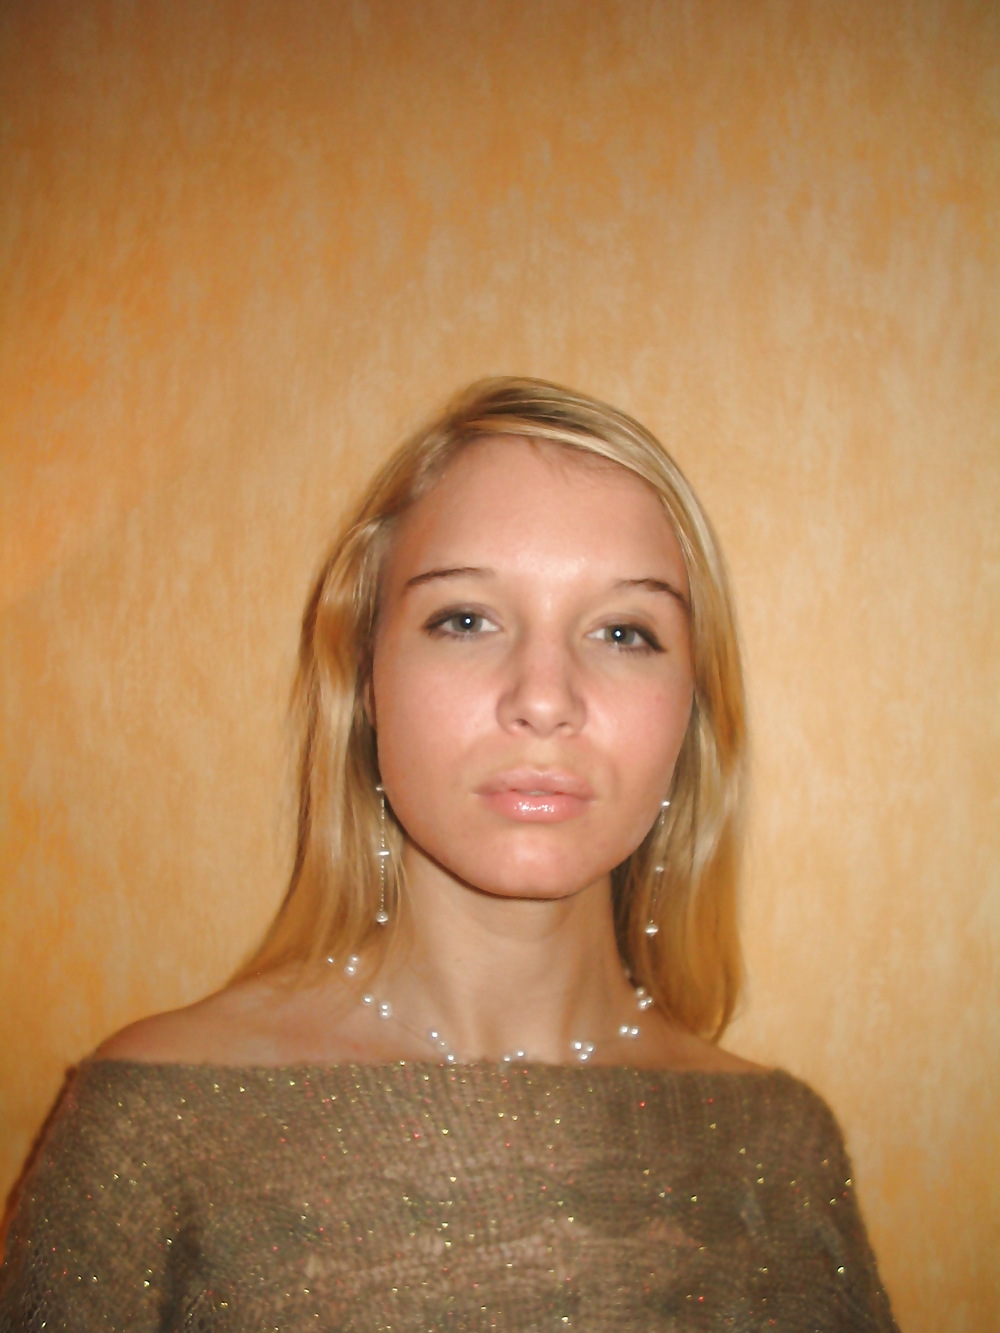 Sexy Blonde German Teen Poses In Lingerie #24813761